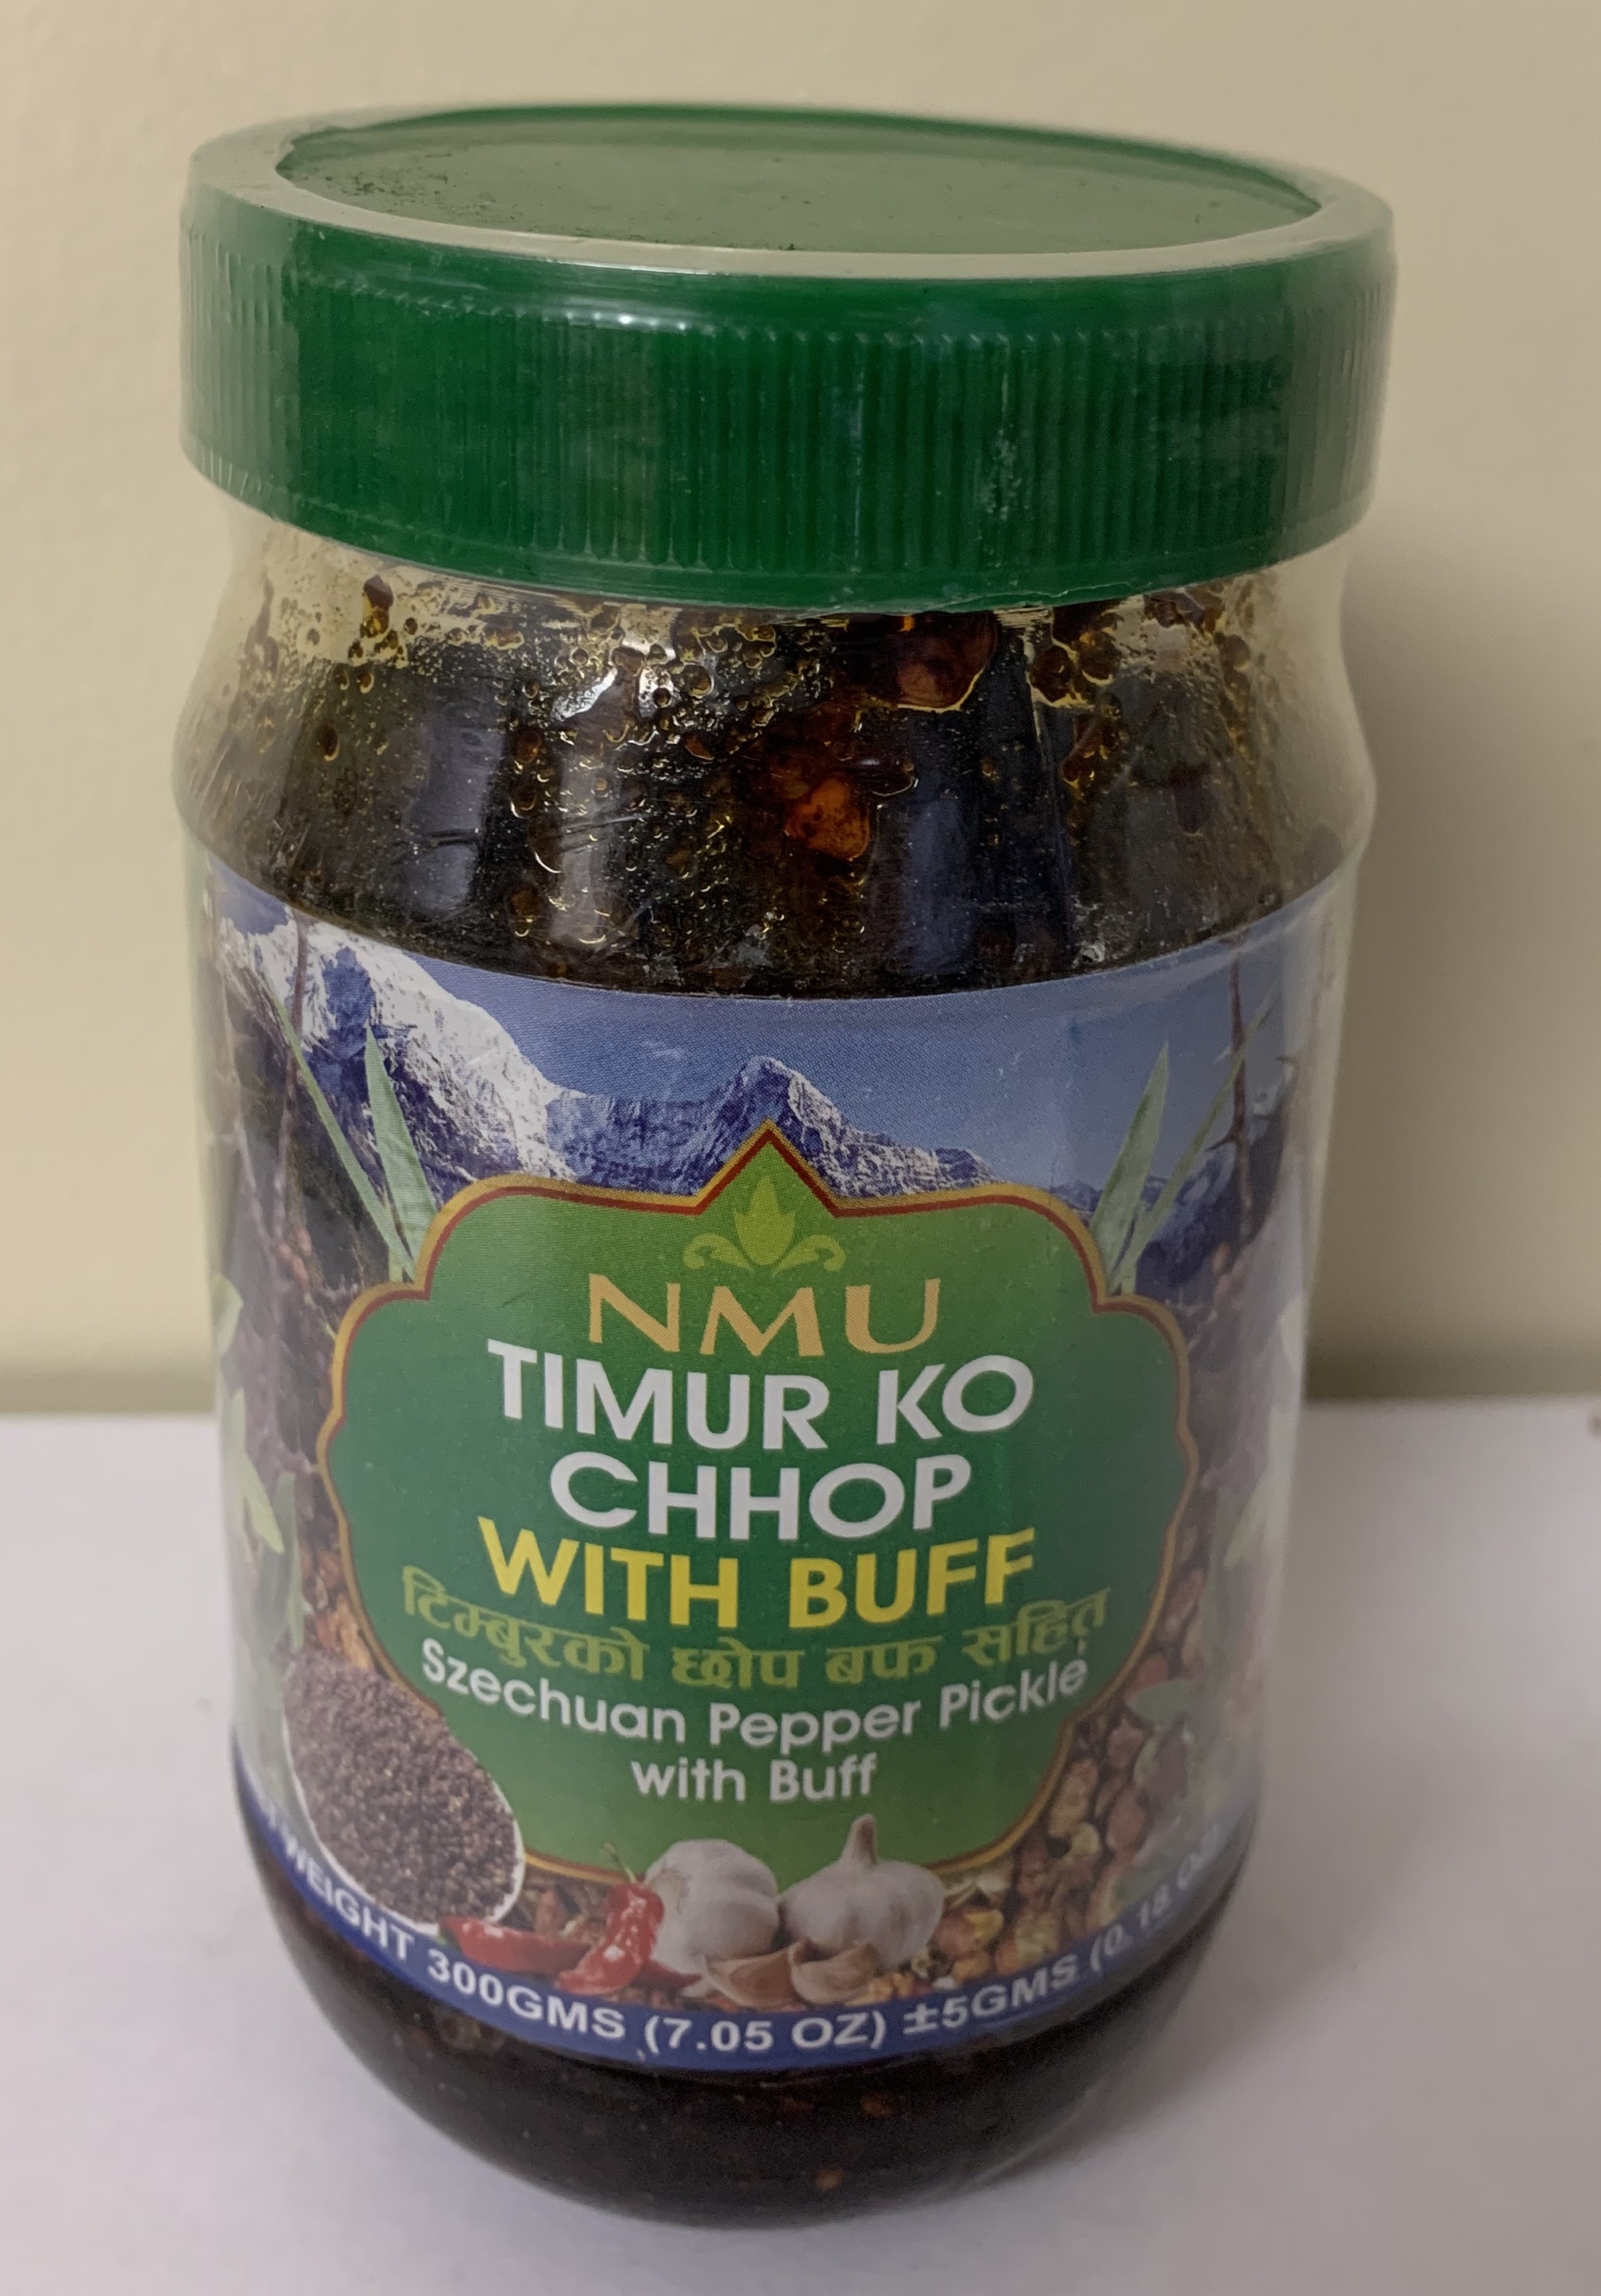 Timur Chop with Buff